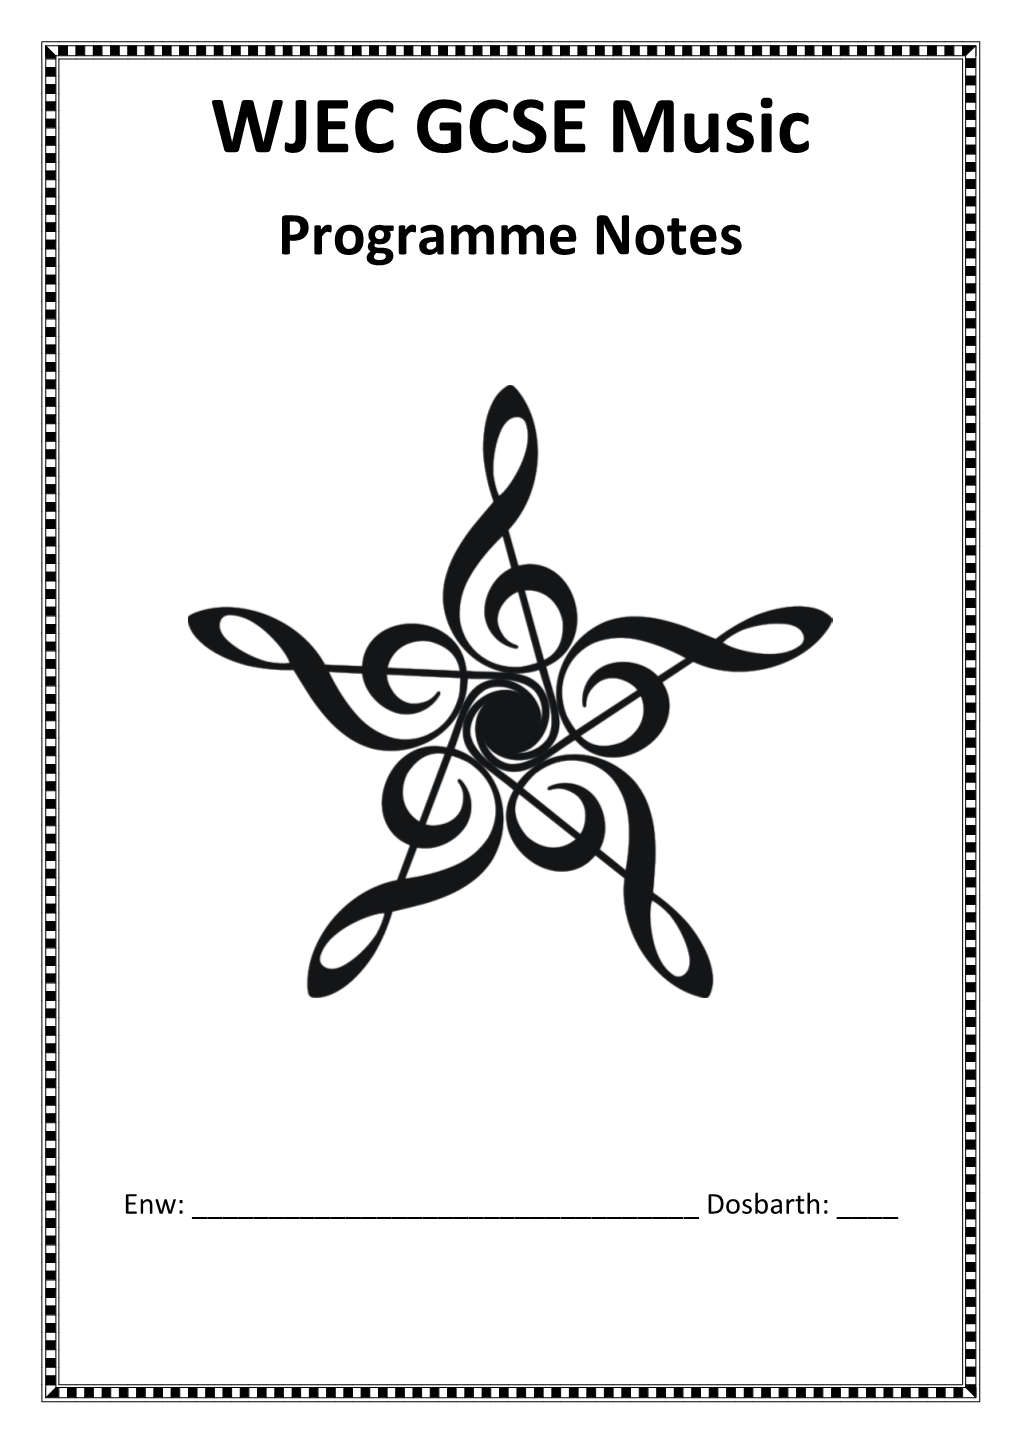 WJEC GCSE Music Programme Notes